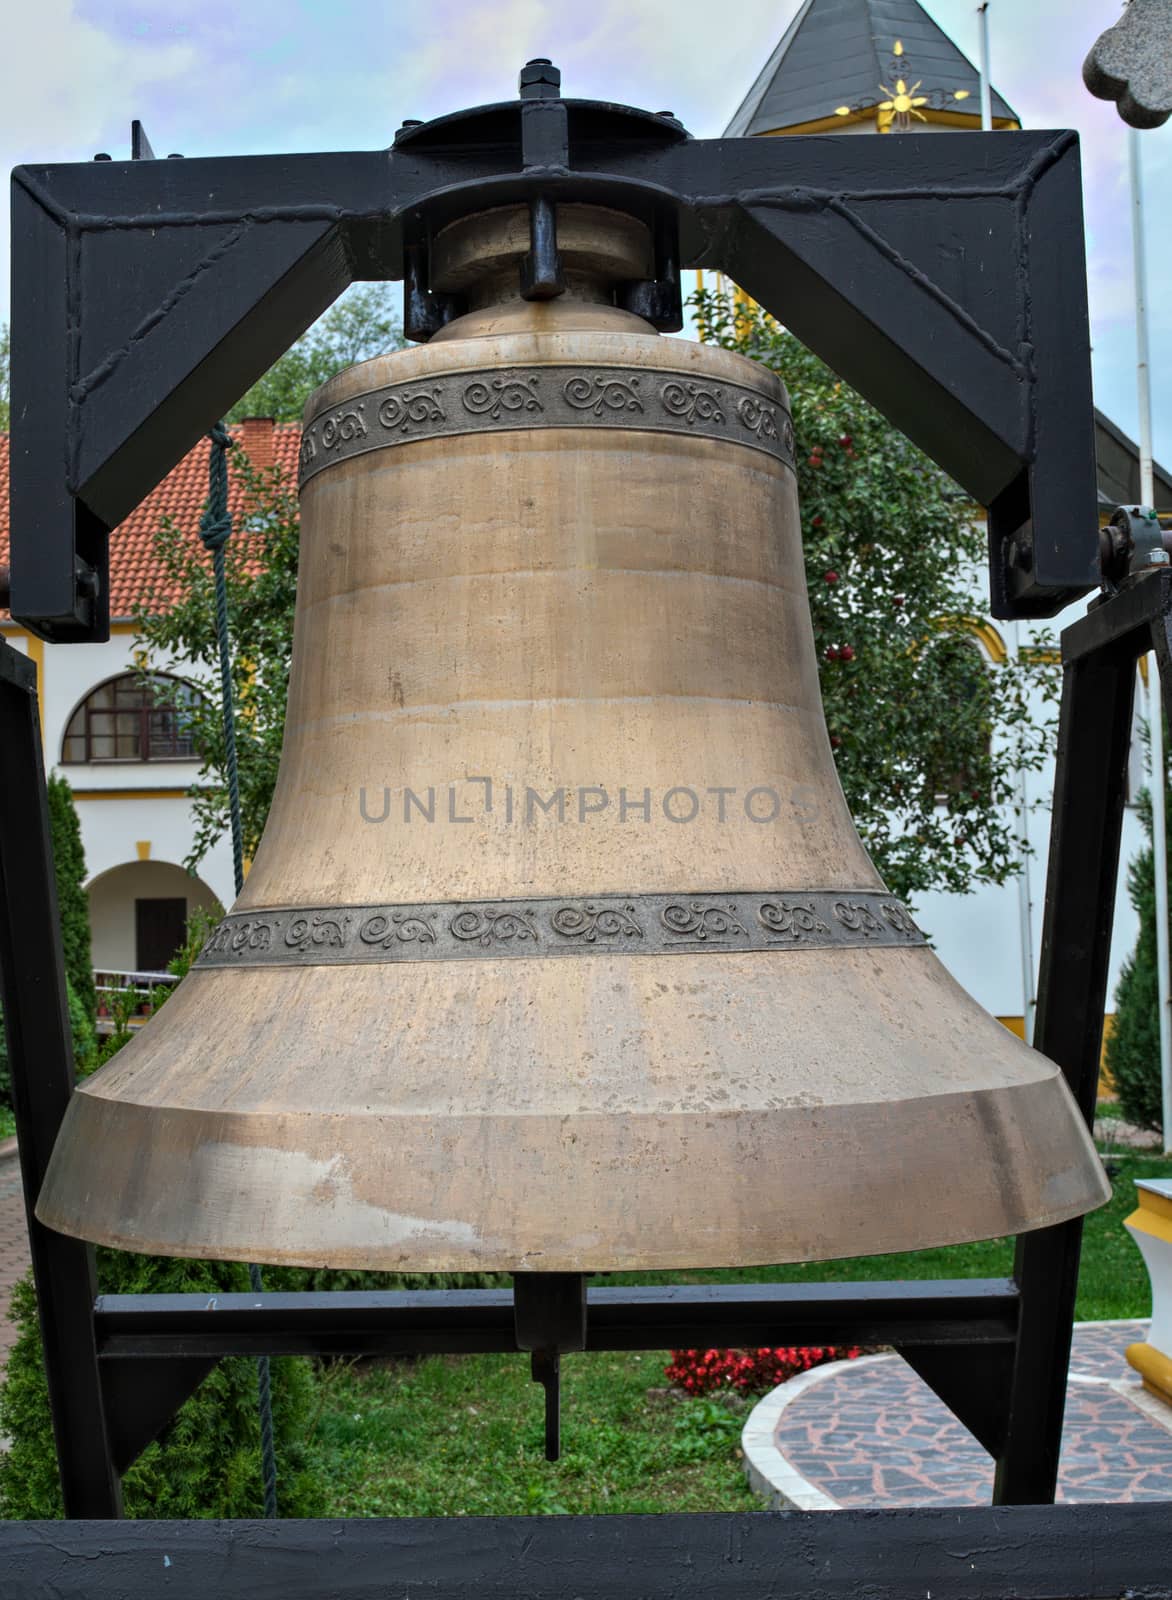 Big bronze bell in monastery in Serbia